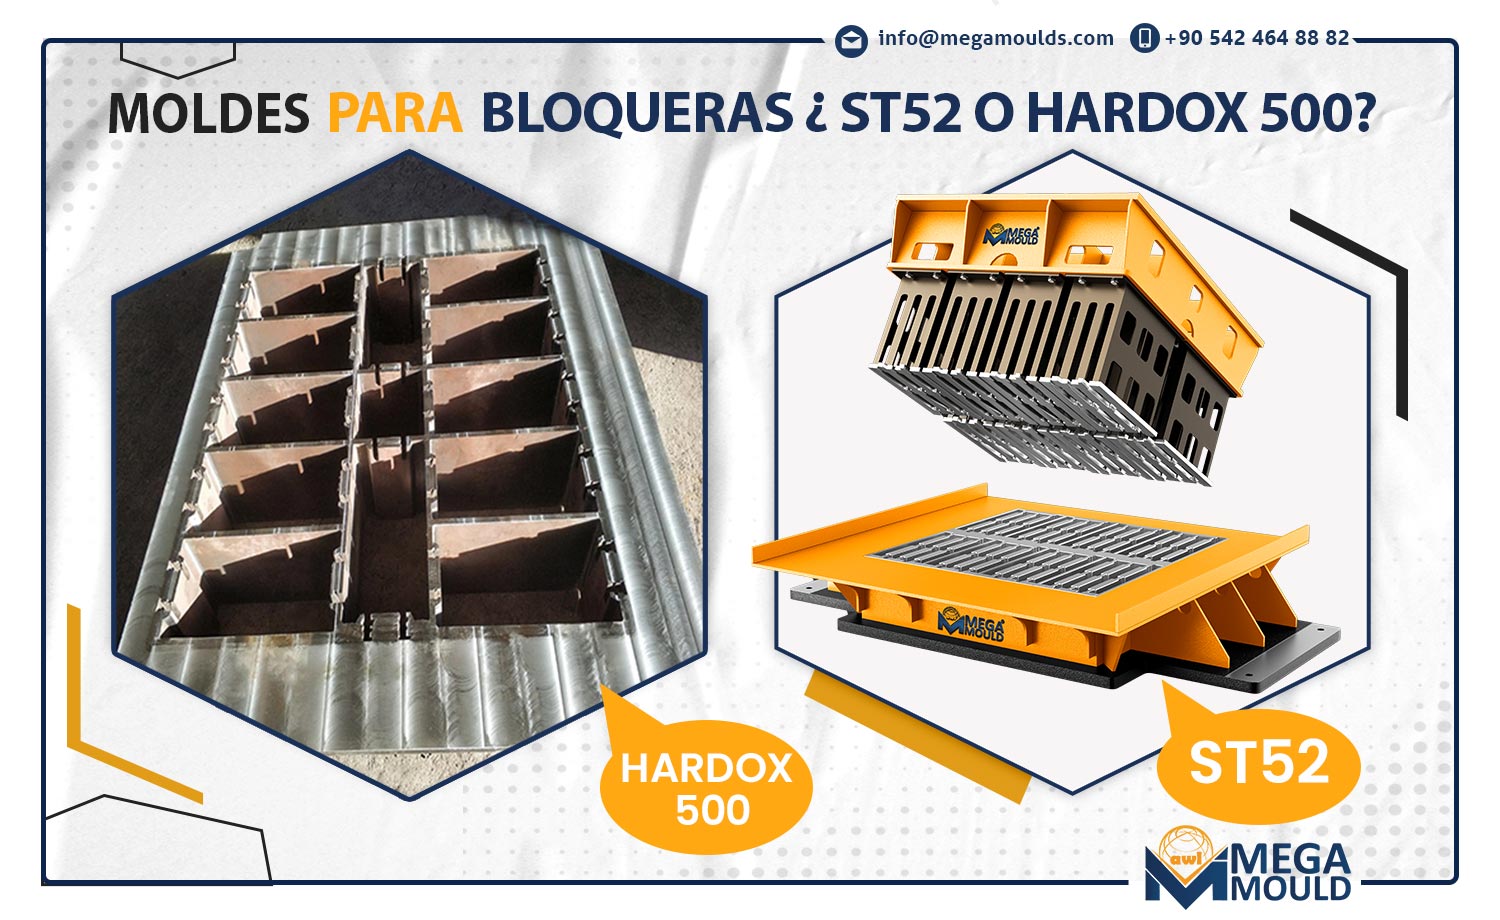 Moldes Para Bloqueras: ST52 vs HARDOX 500